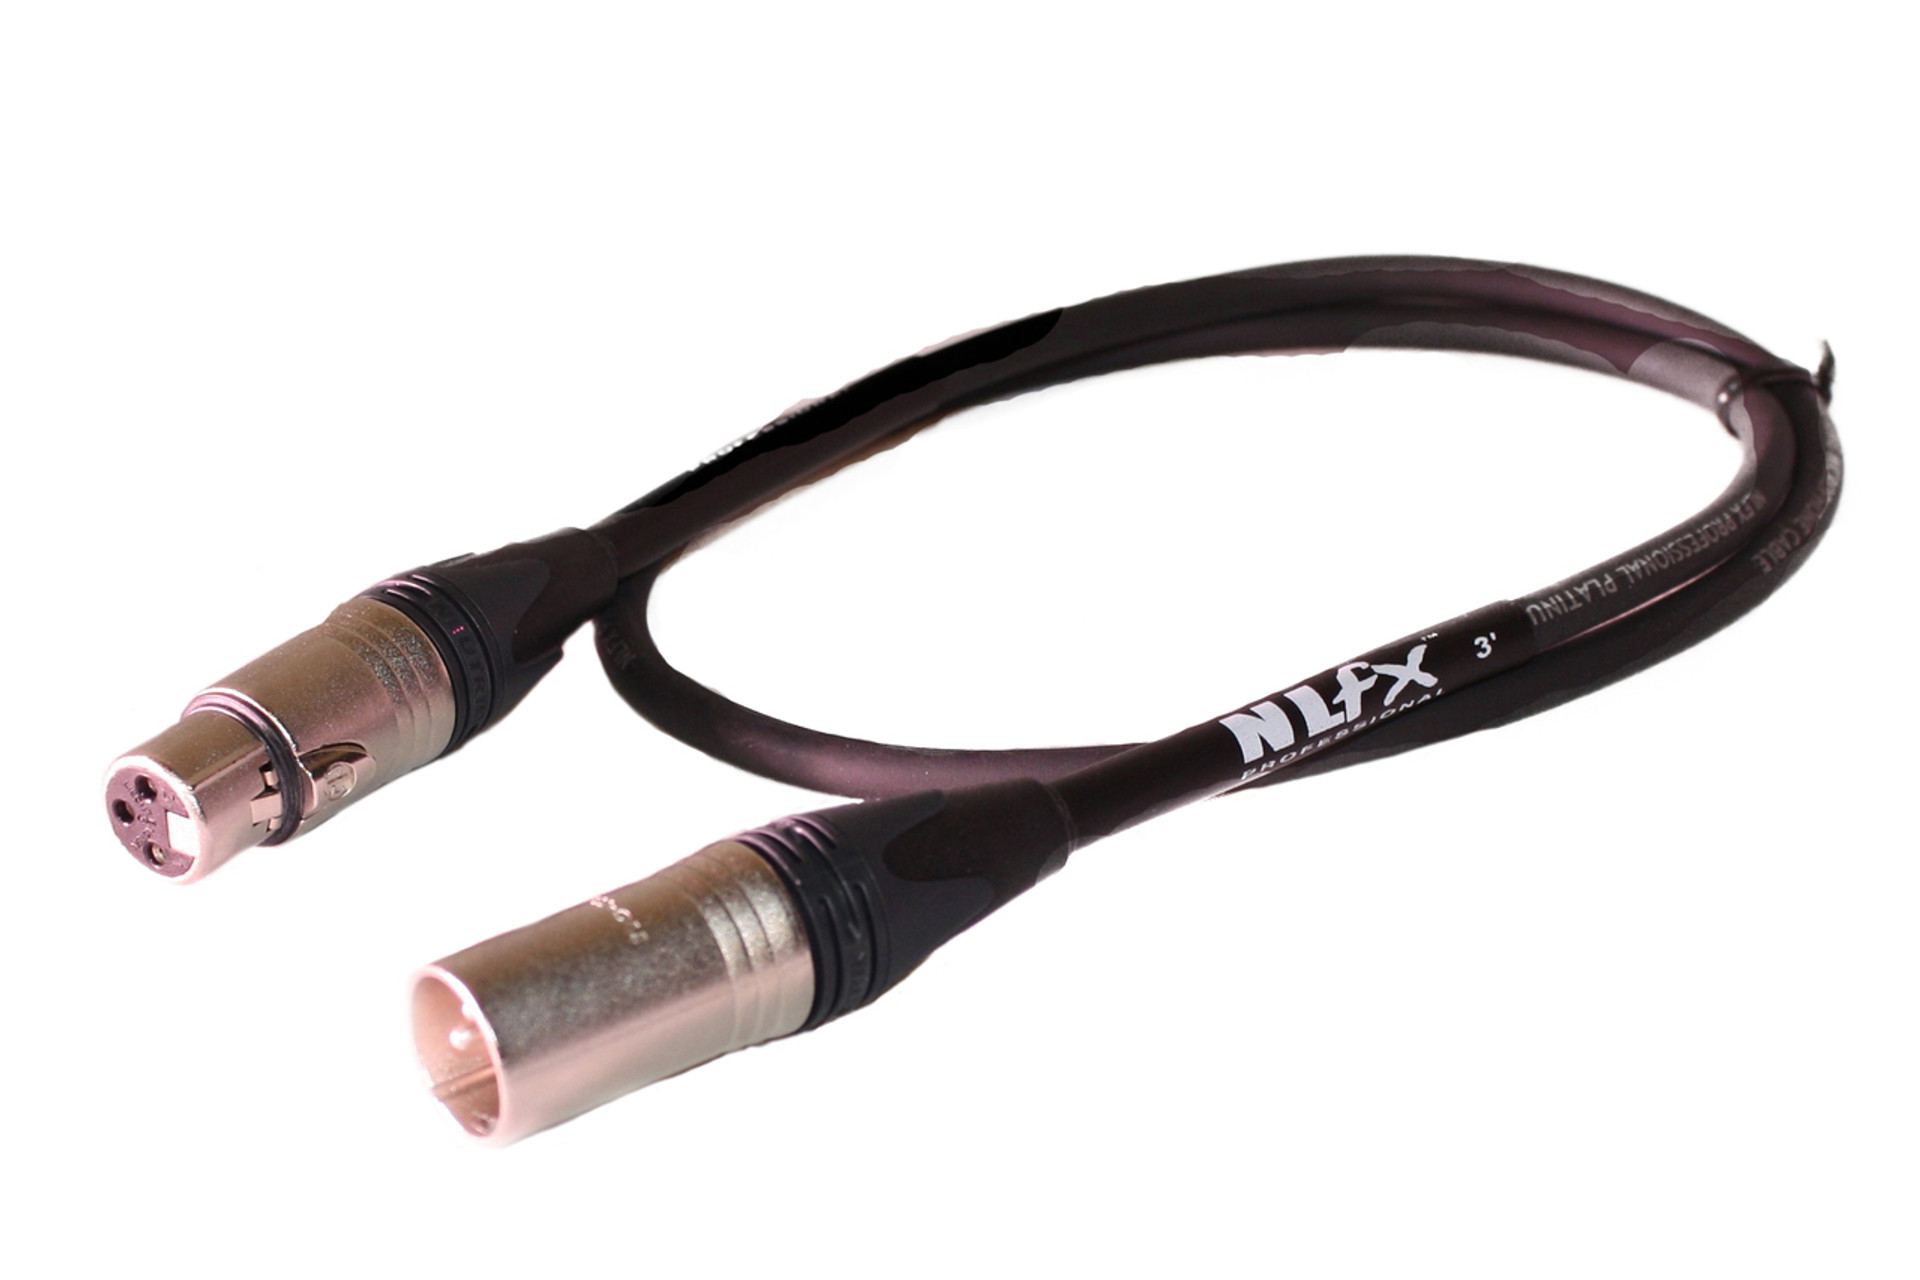 DAP Audio DMX 3-pol, 1,5m « Controller Cable